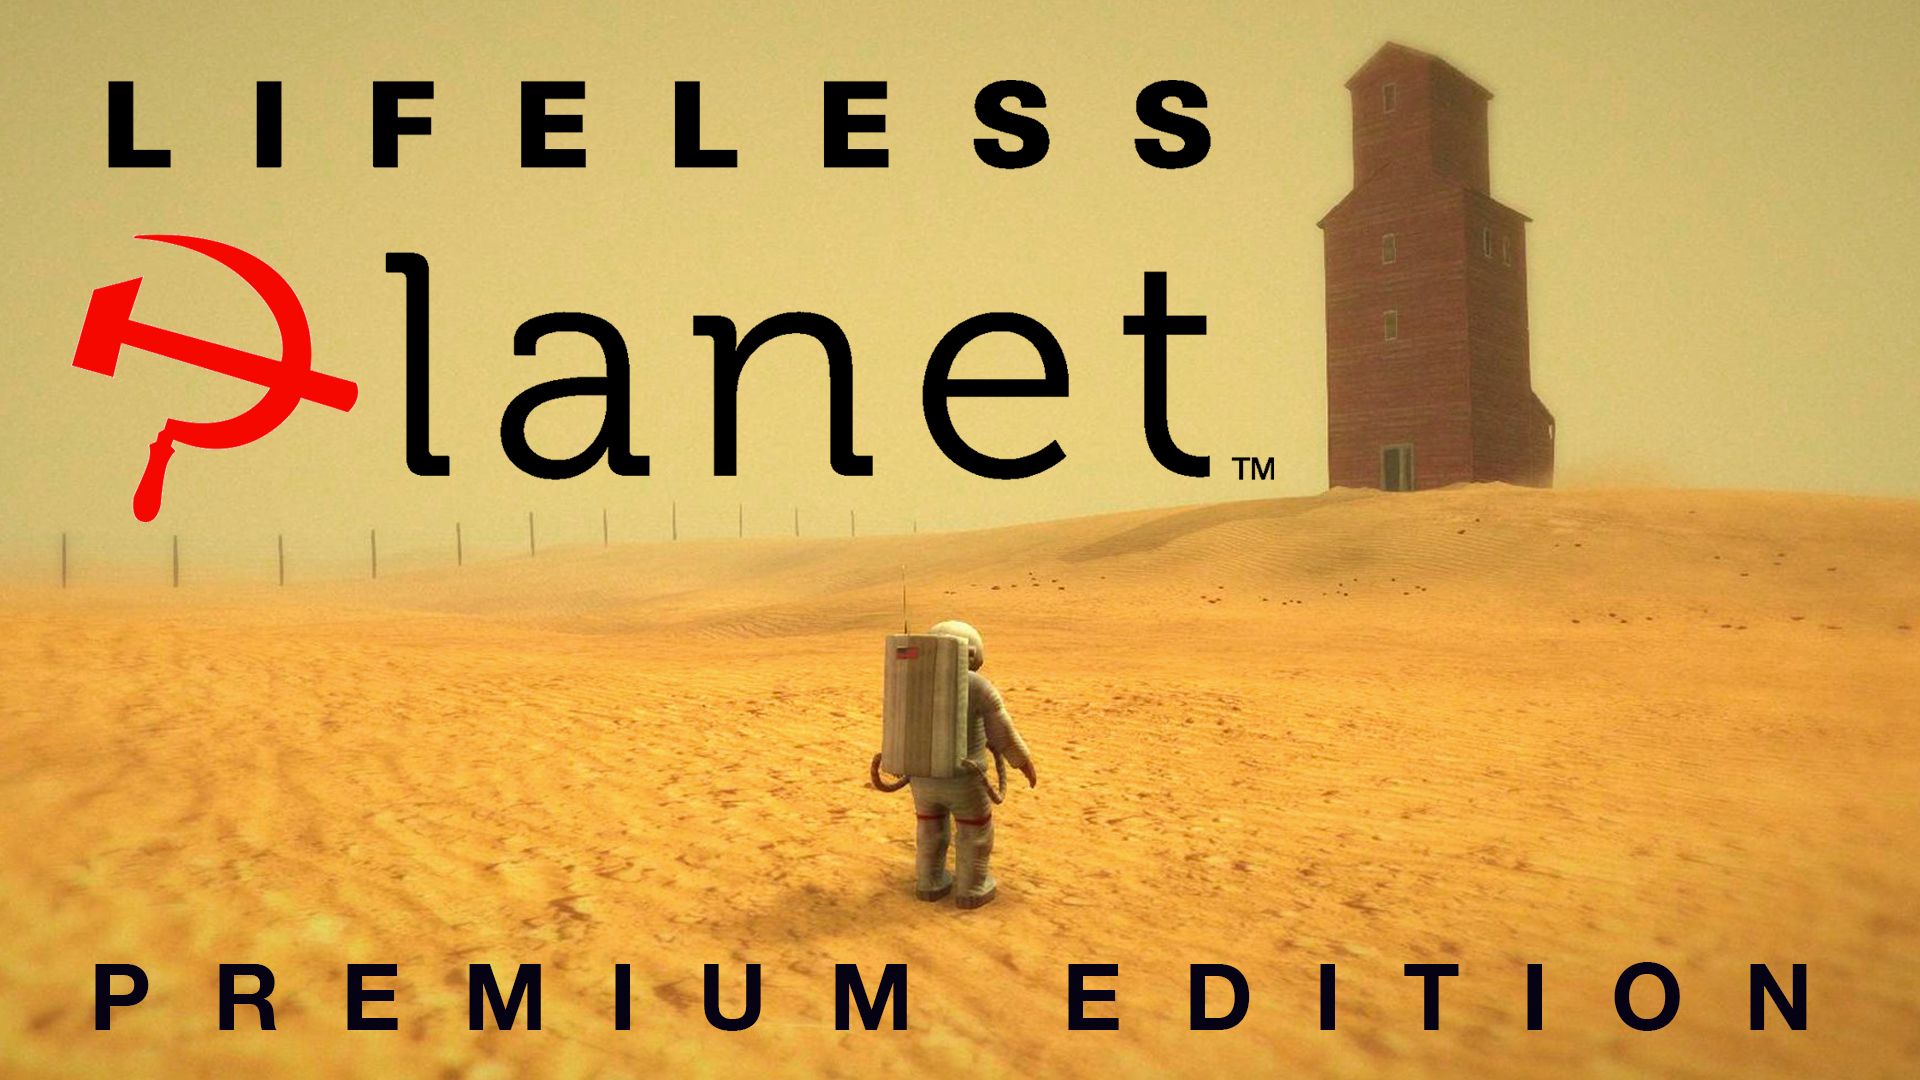 lifeless planet premier edition ps4 review